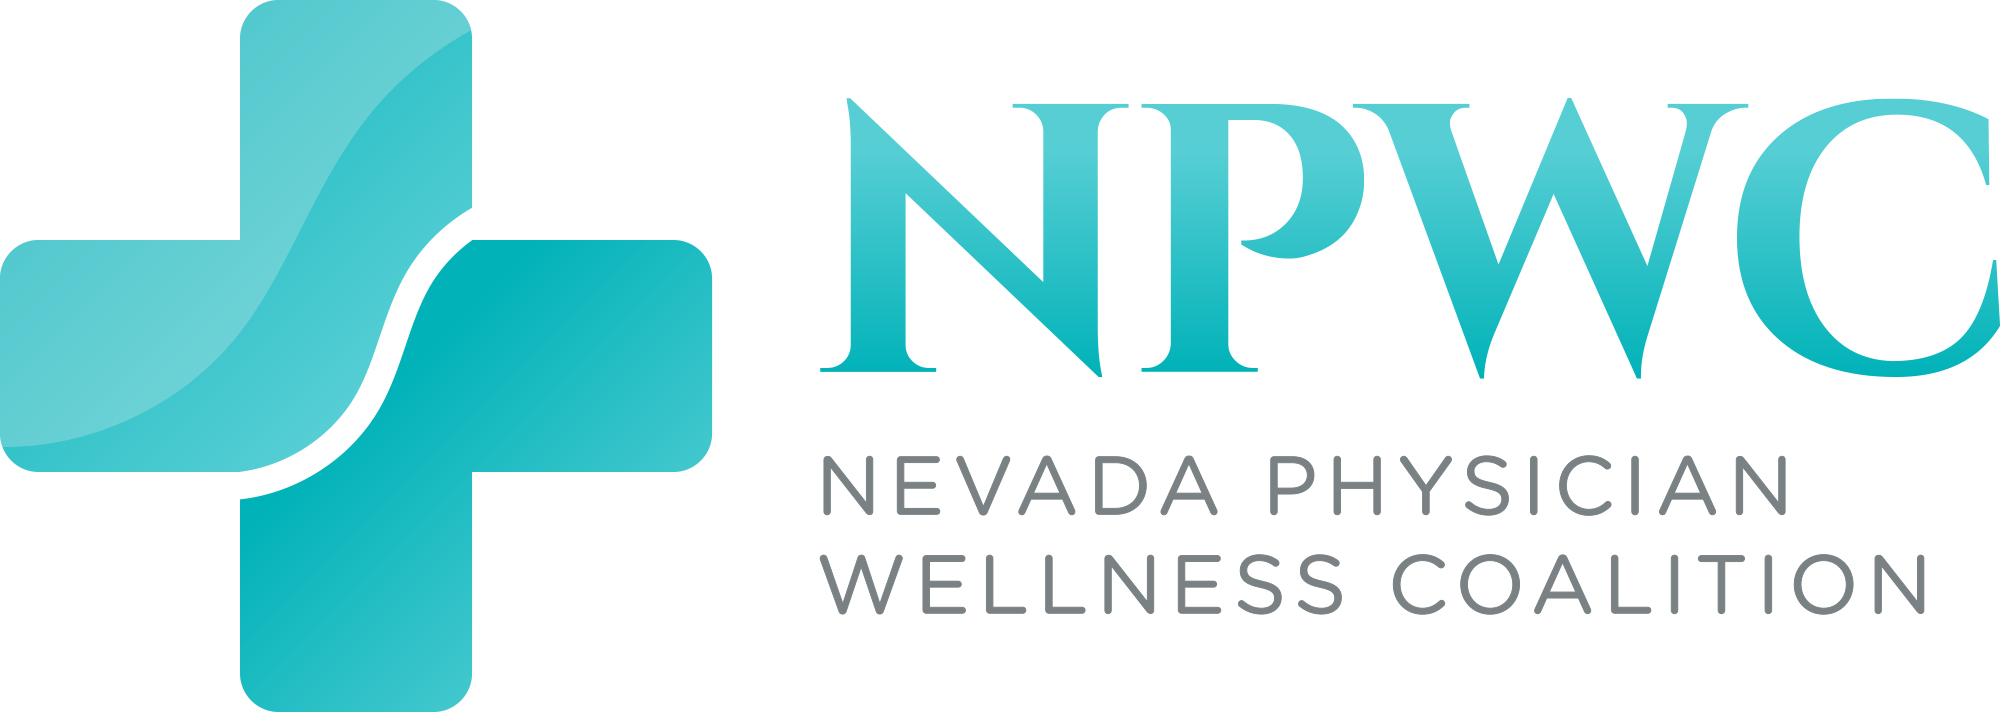 Nevada Physician Wellness Coalition logo